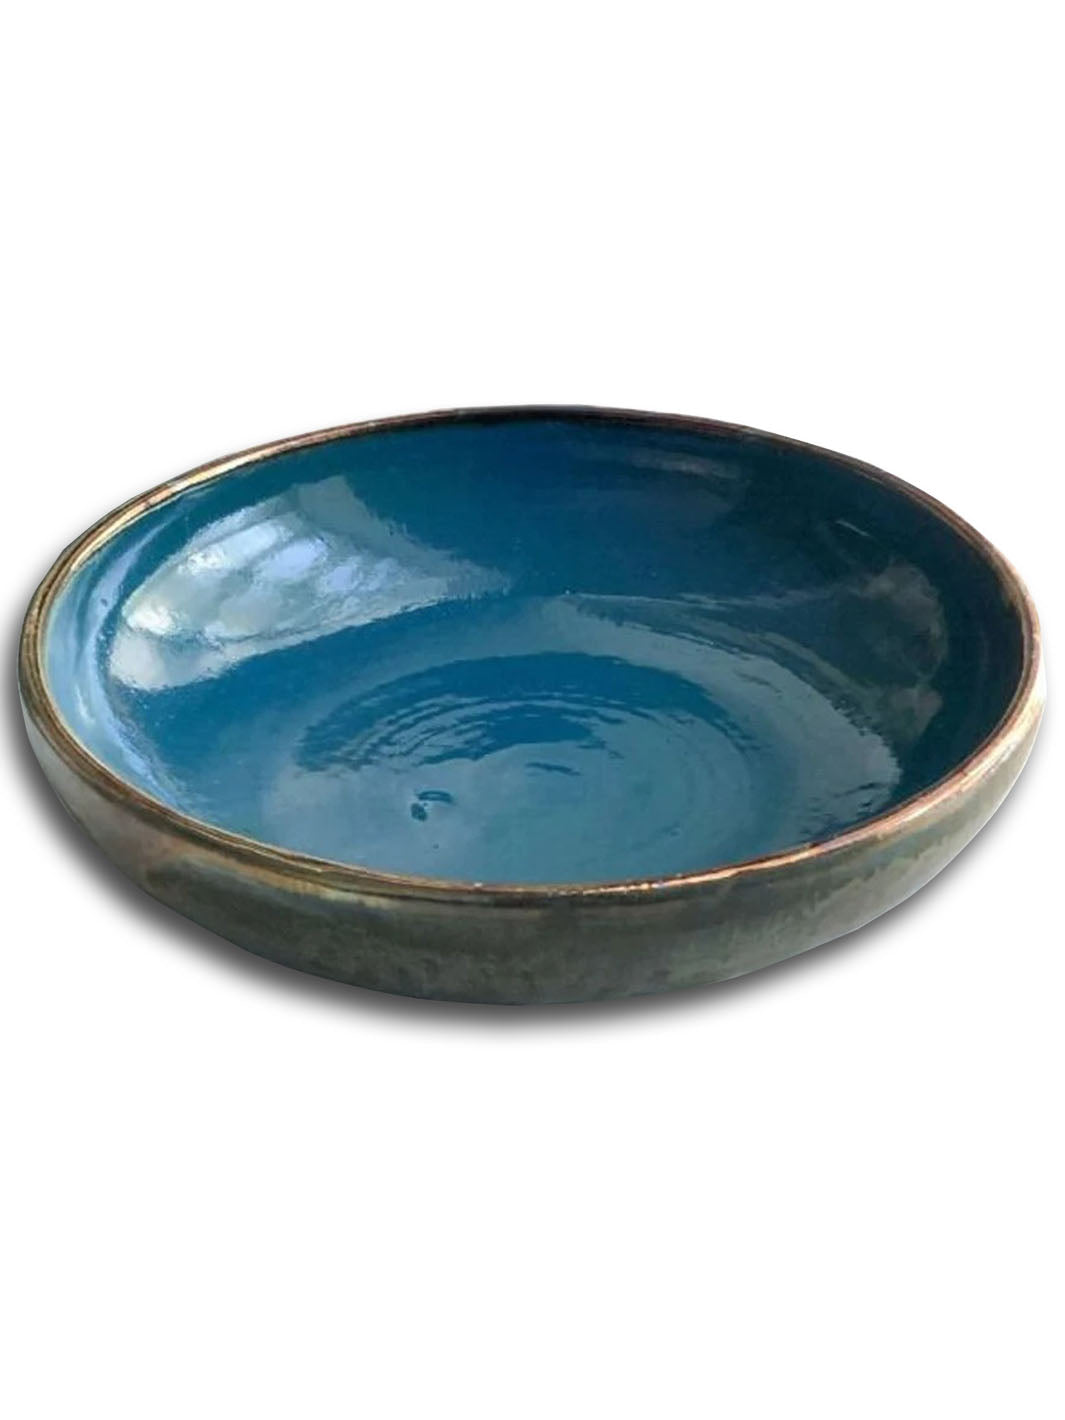 Artistic Handcrafted Peacock Art & Glamor Ceramic Pasta Bowl Deco Bowls 